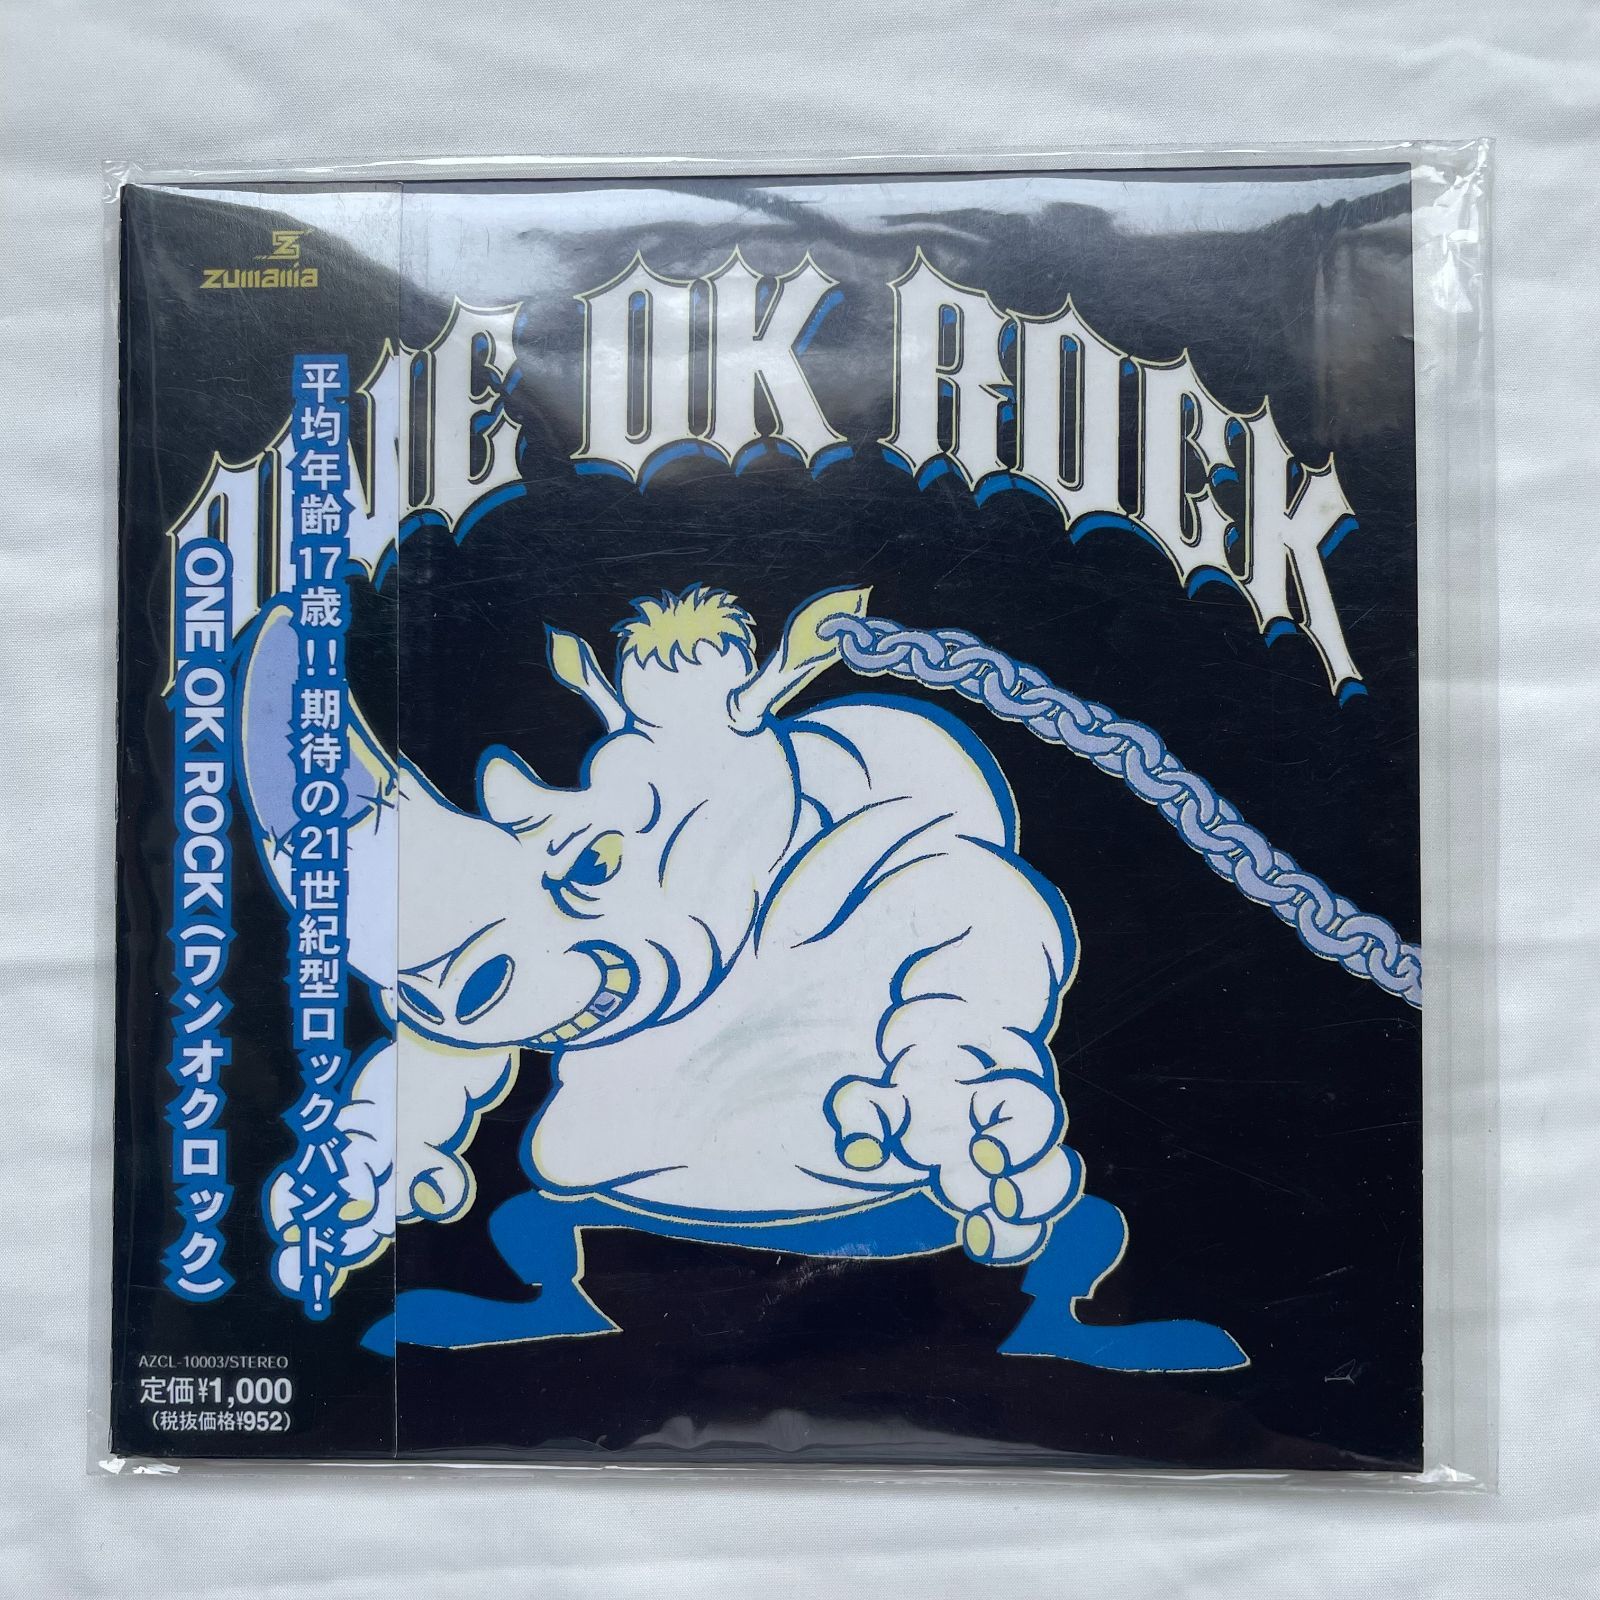 ONE OK ROCKワンオクロック廃盤インディーズ - メルカリ